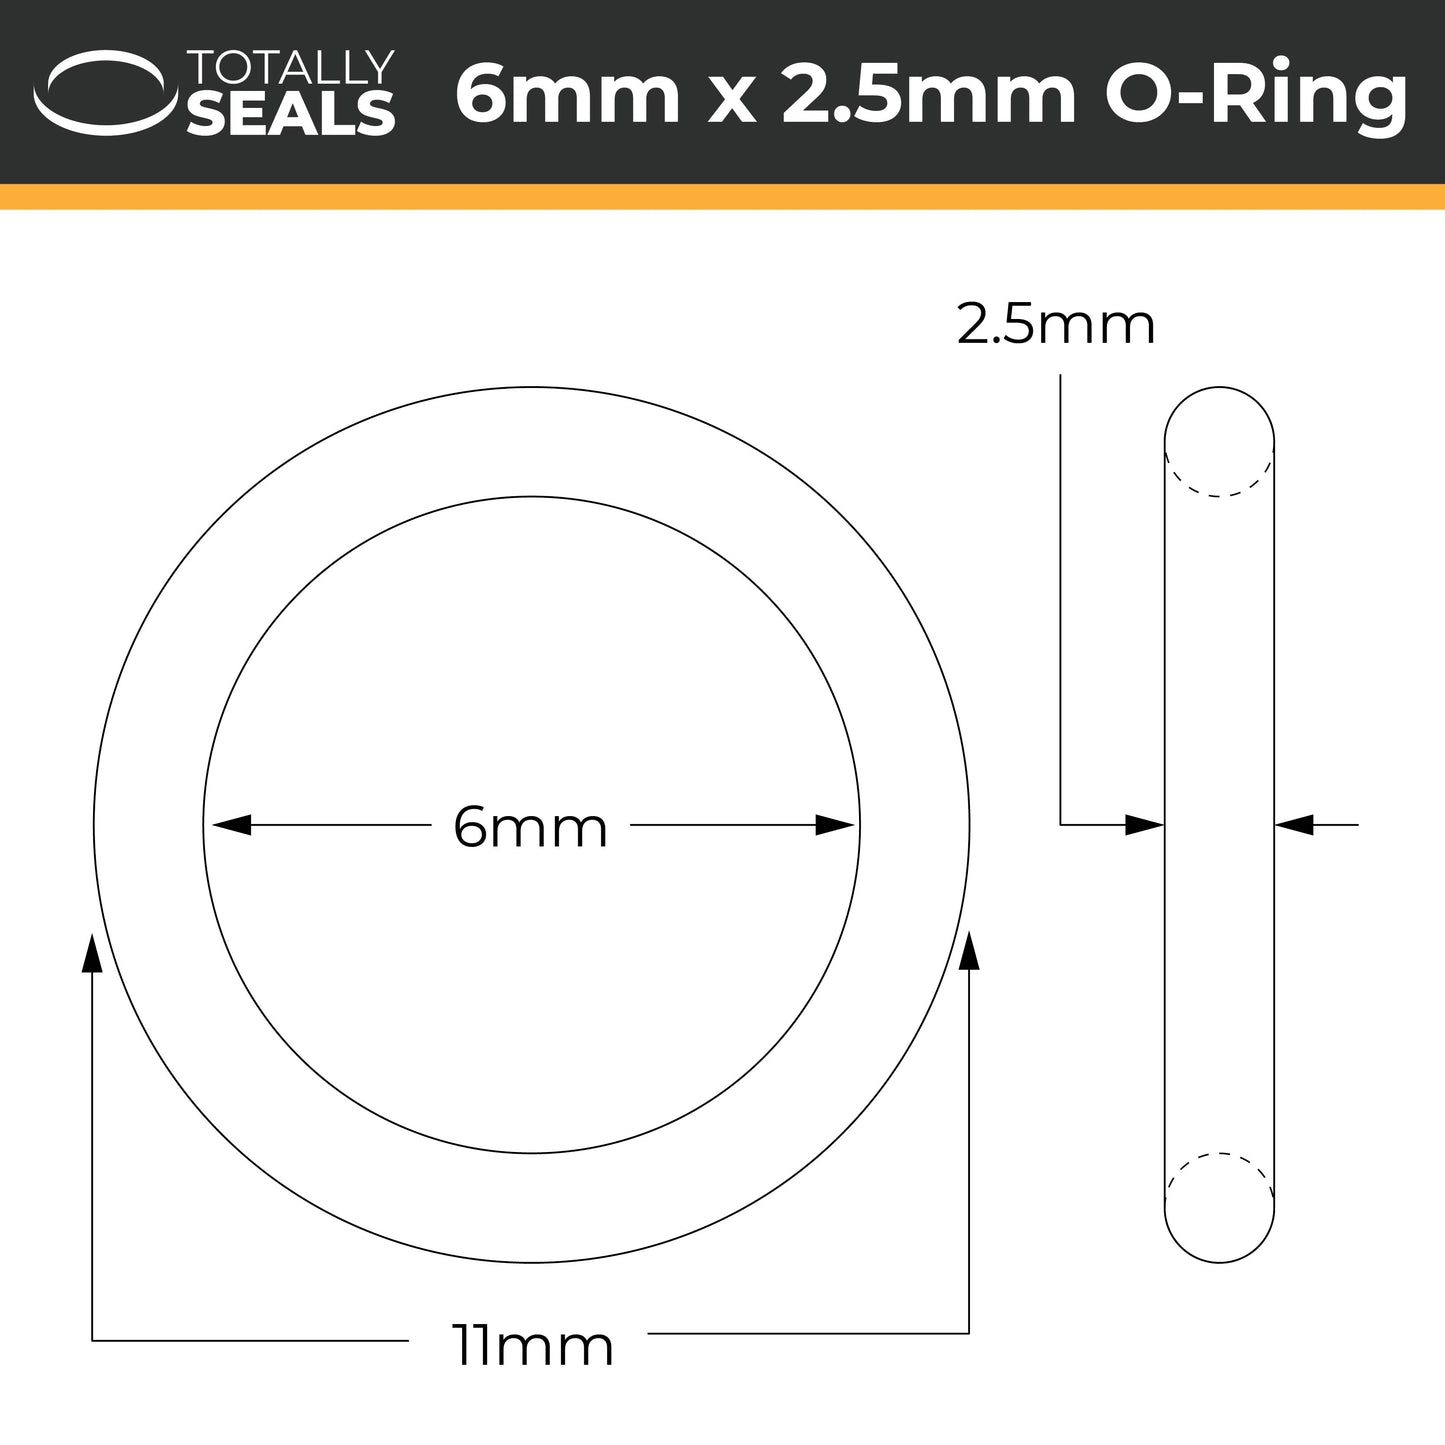 6mm x 2.5mm (11mm OD) FKM (Viton™) O-Rings - Totally Seals®